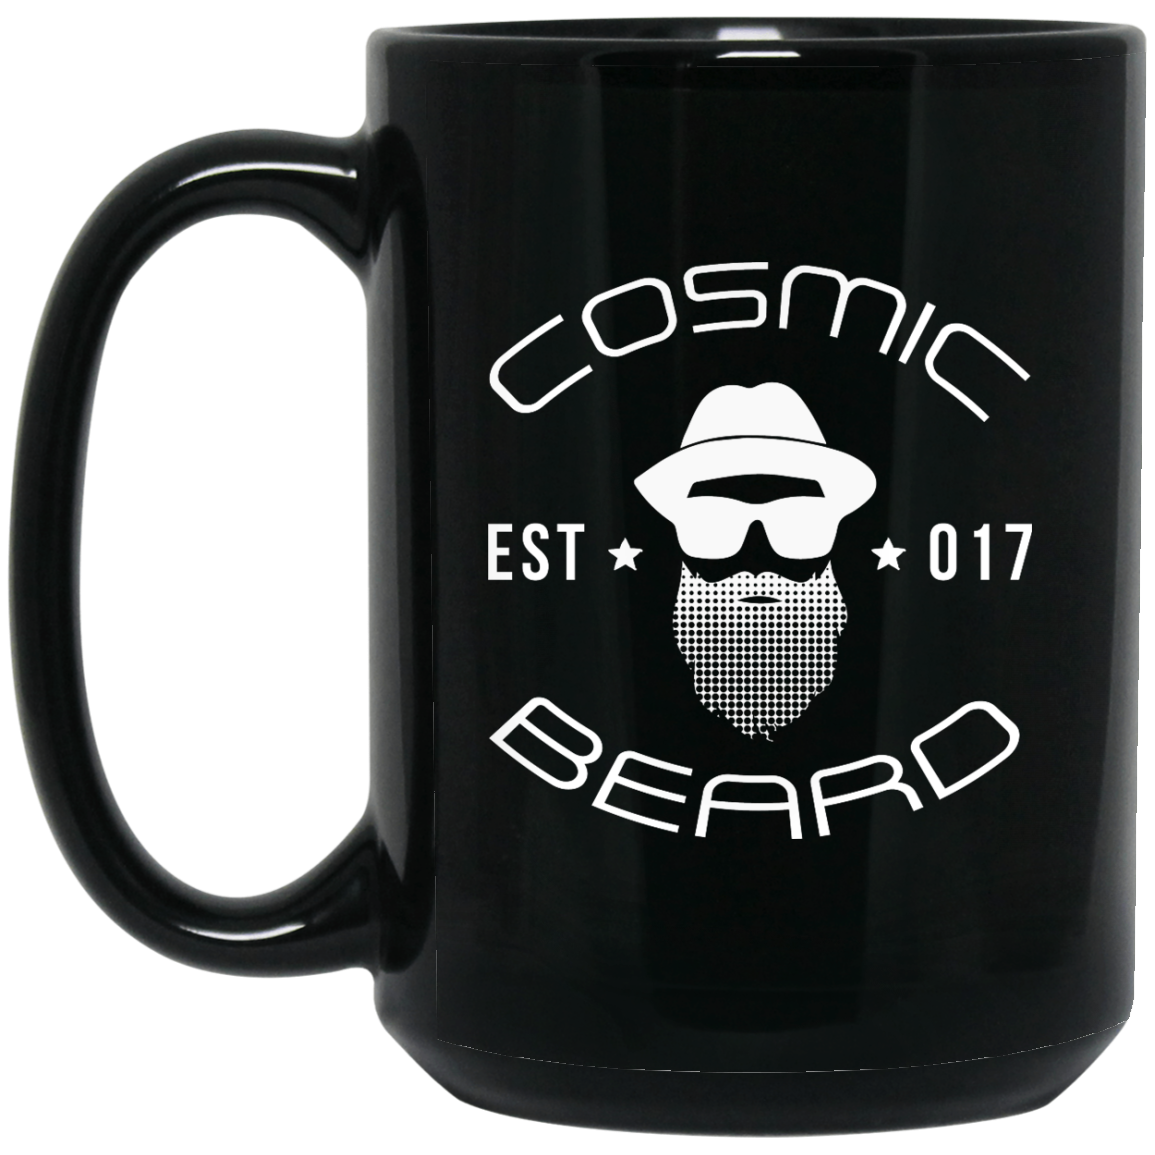 Cosmic Beard Branded 15 oz. Black Mug